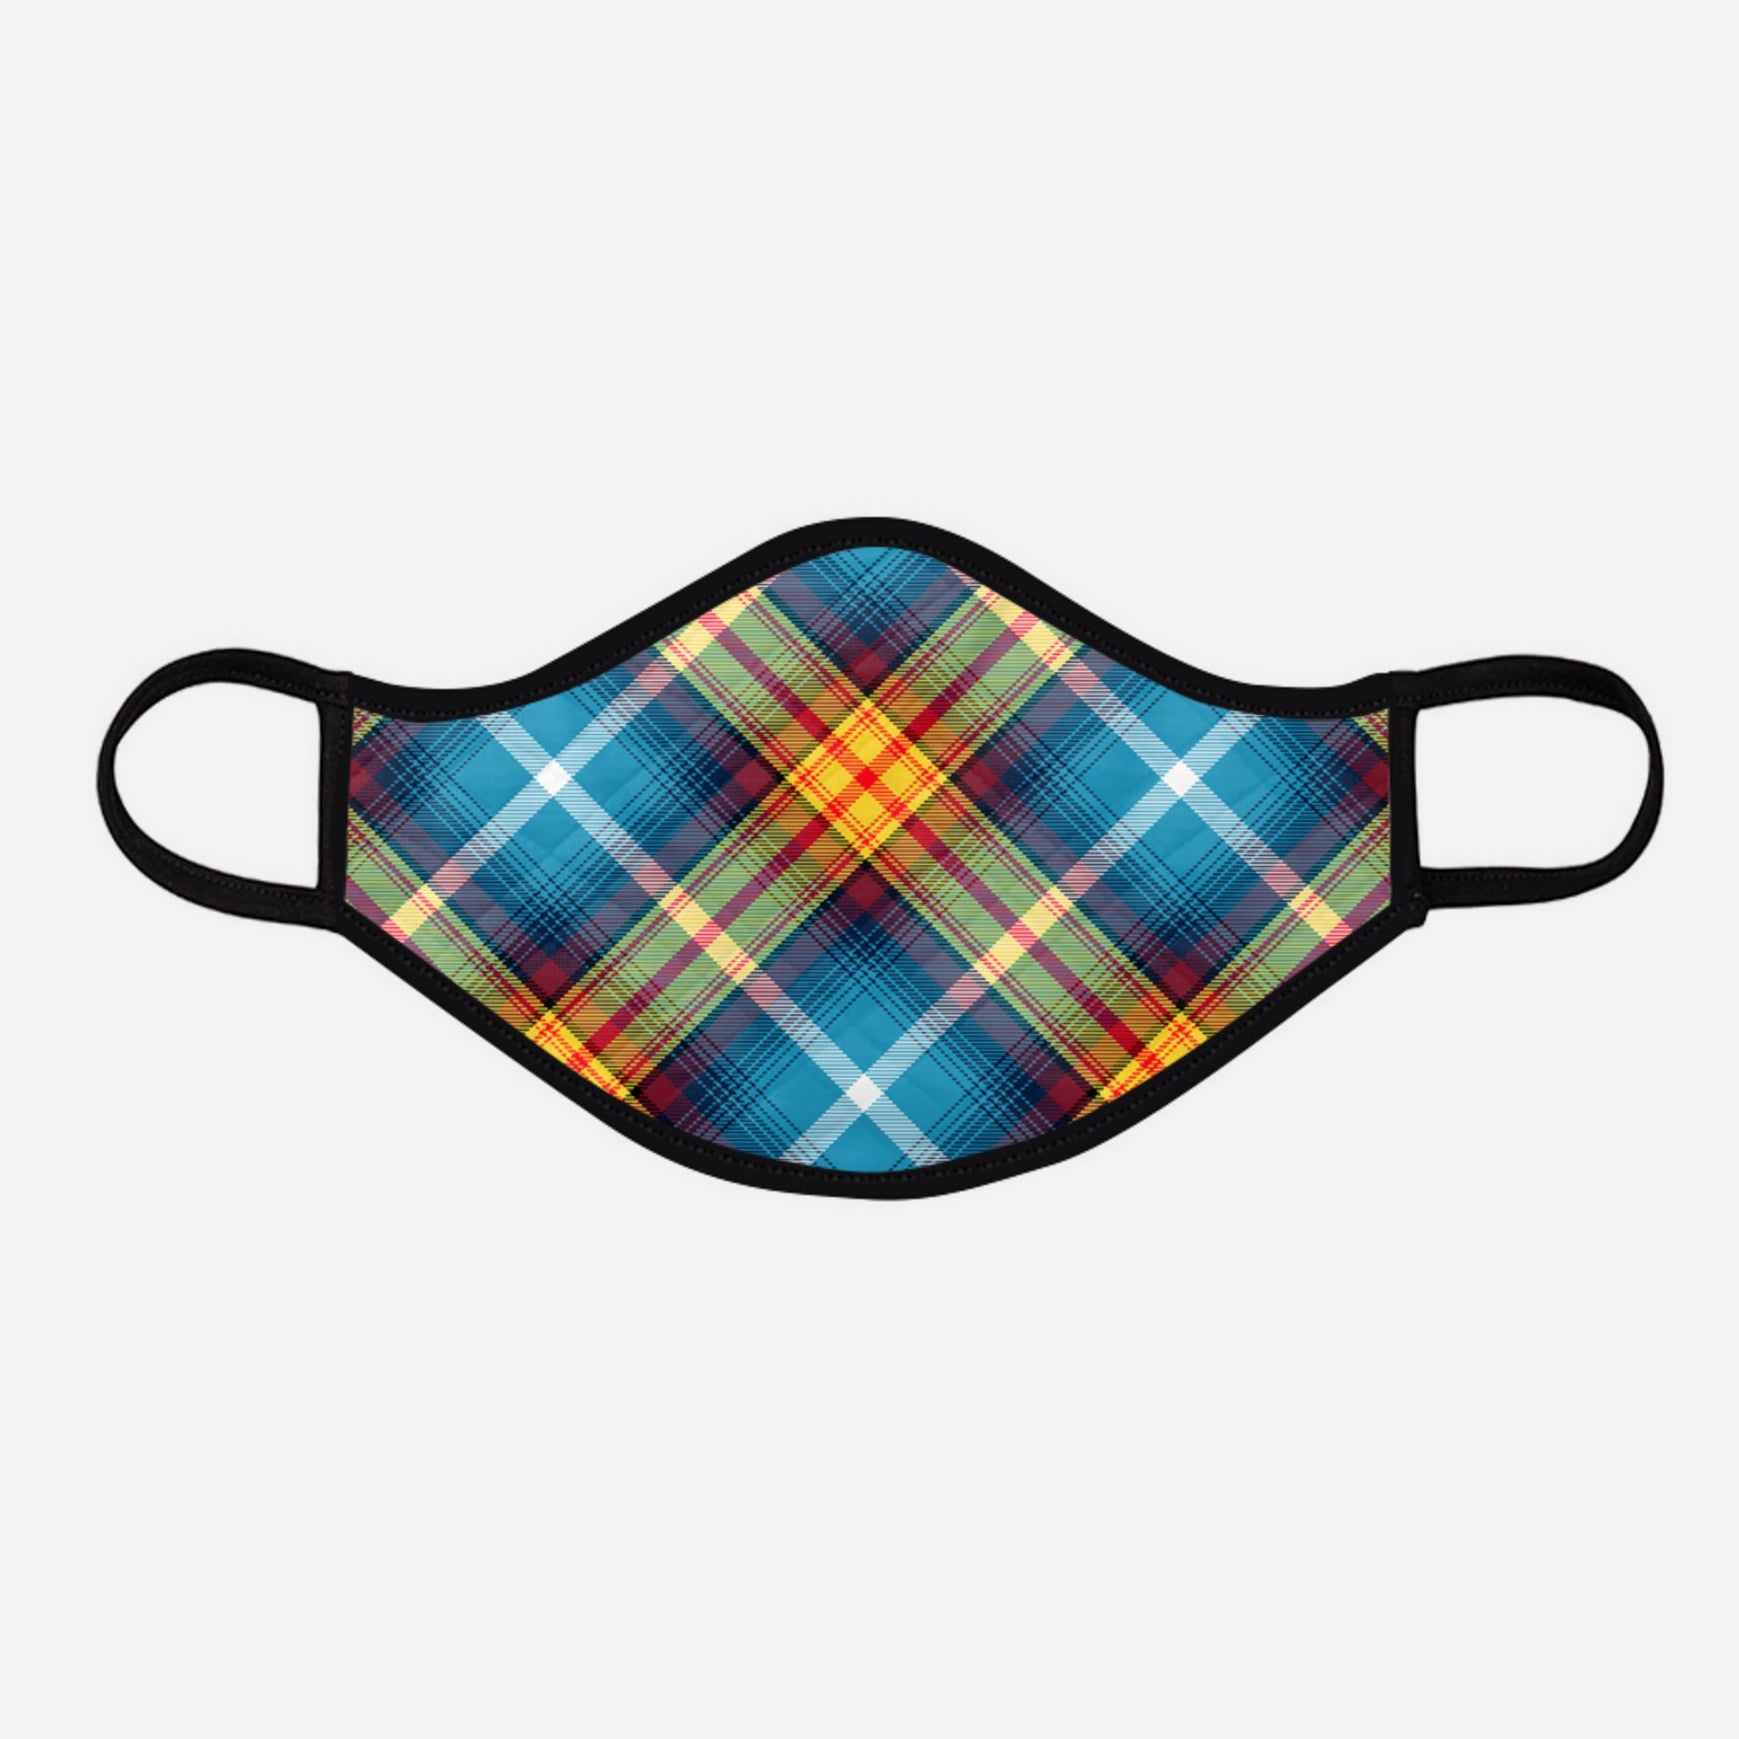 Contoured Face Mask - face covering - Nicola Sturgeon - Declaration of Scottish Independence tartan - by Steven Patrick Sim the Tartan Artisan - Stevie Tartan Guy - large